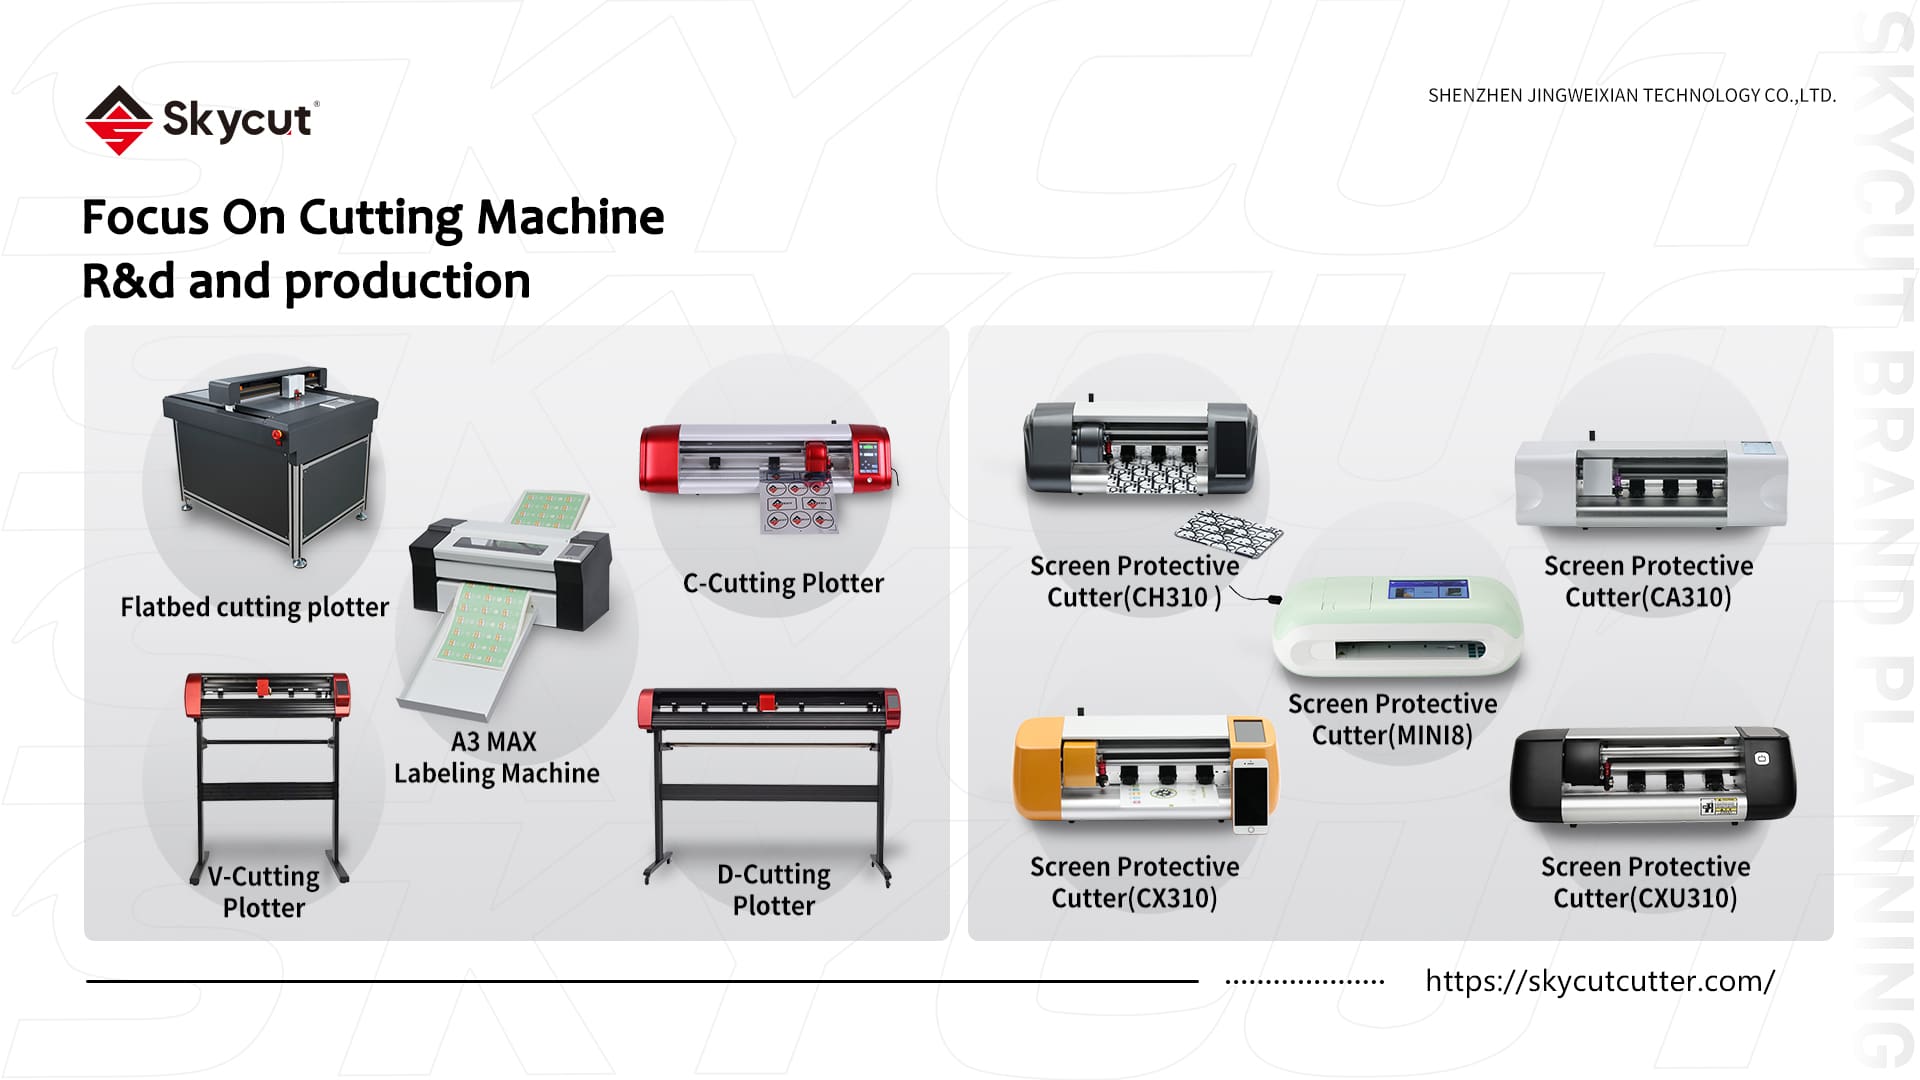 Skycut Cutting Machine Factory - Pioneering Breakthroughs